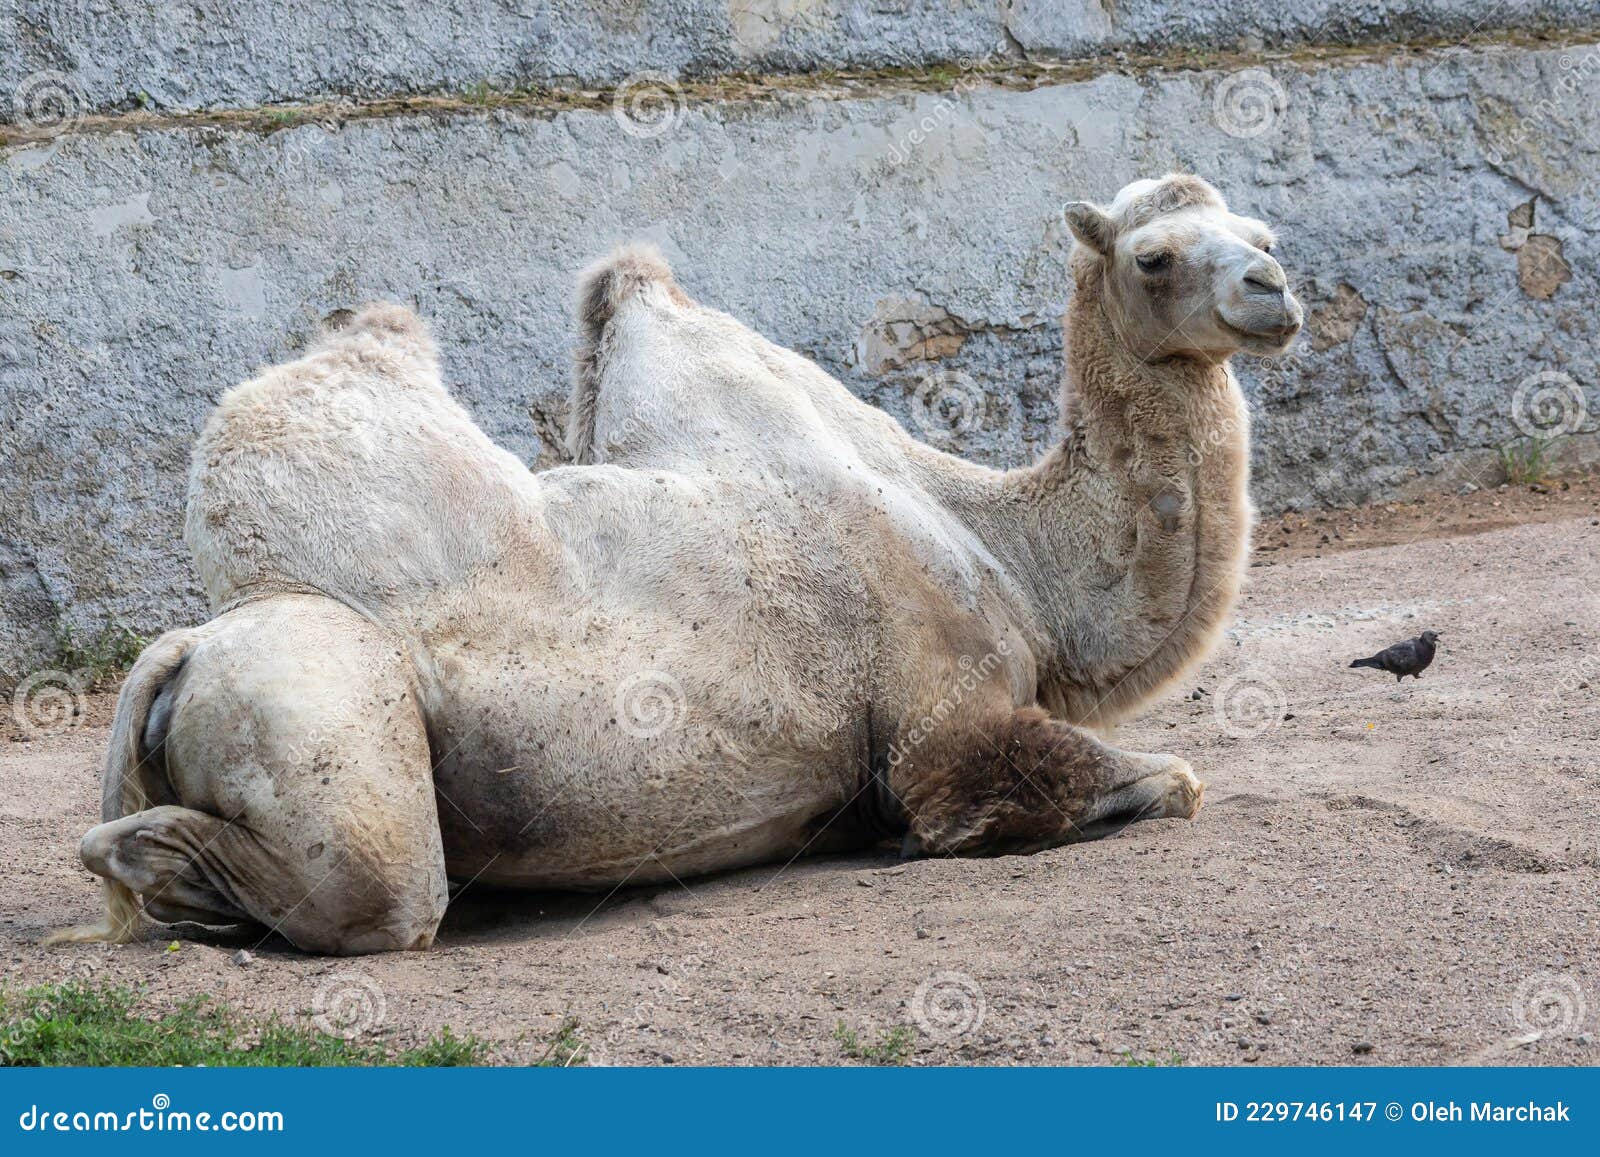 A Camel in the Siberian Zoo. Camel S Head Close-up. Long Camel Hair ...